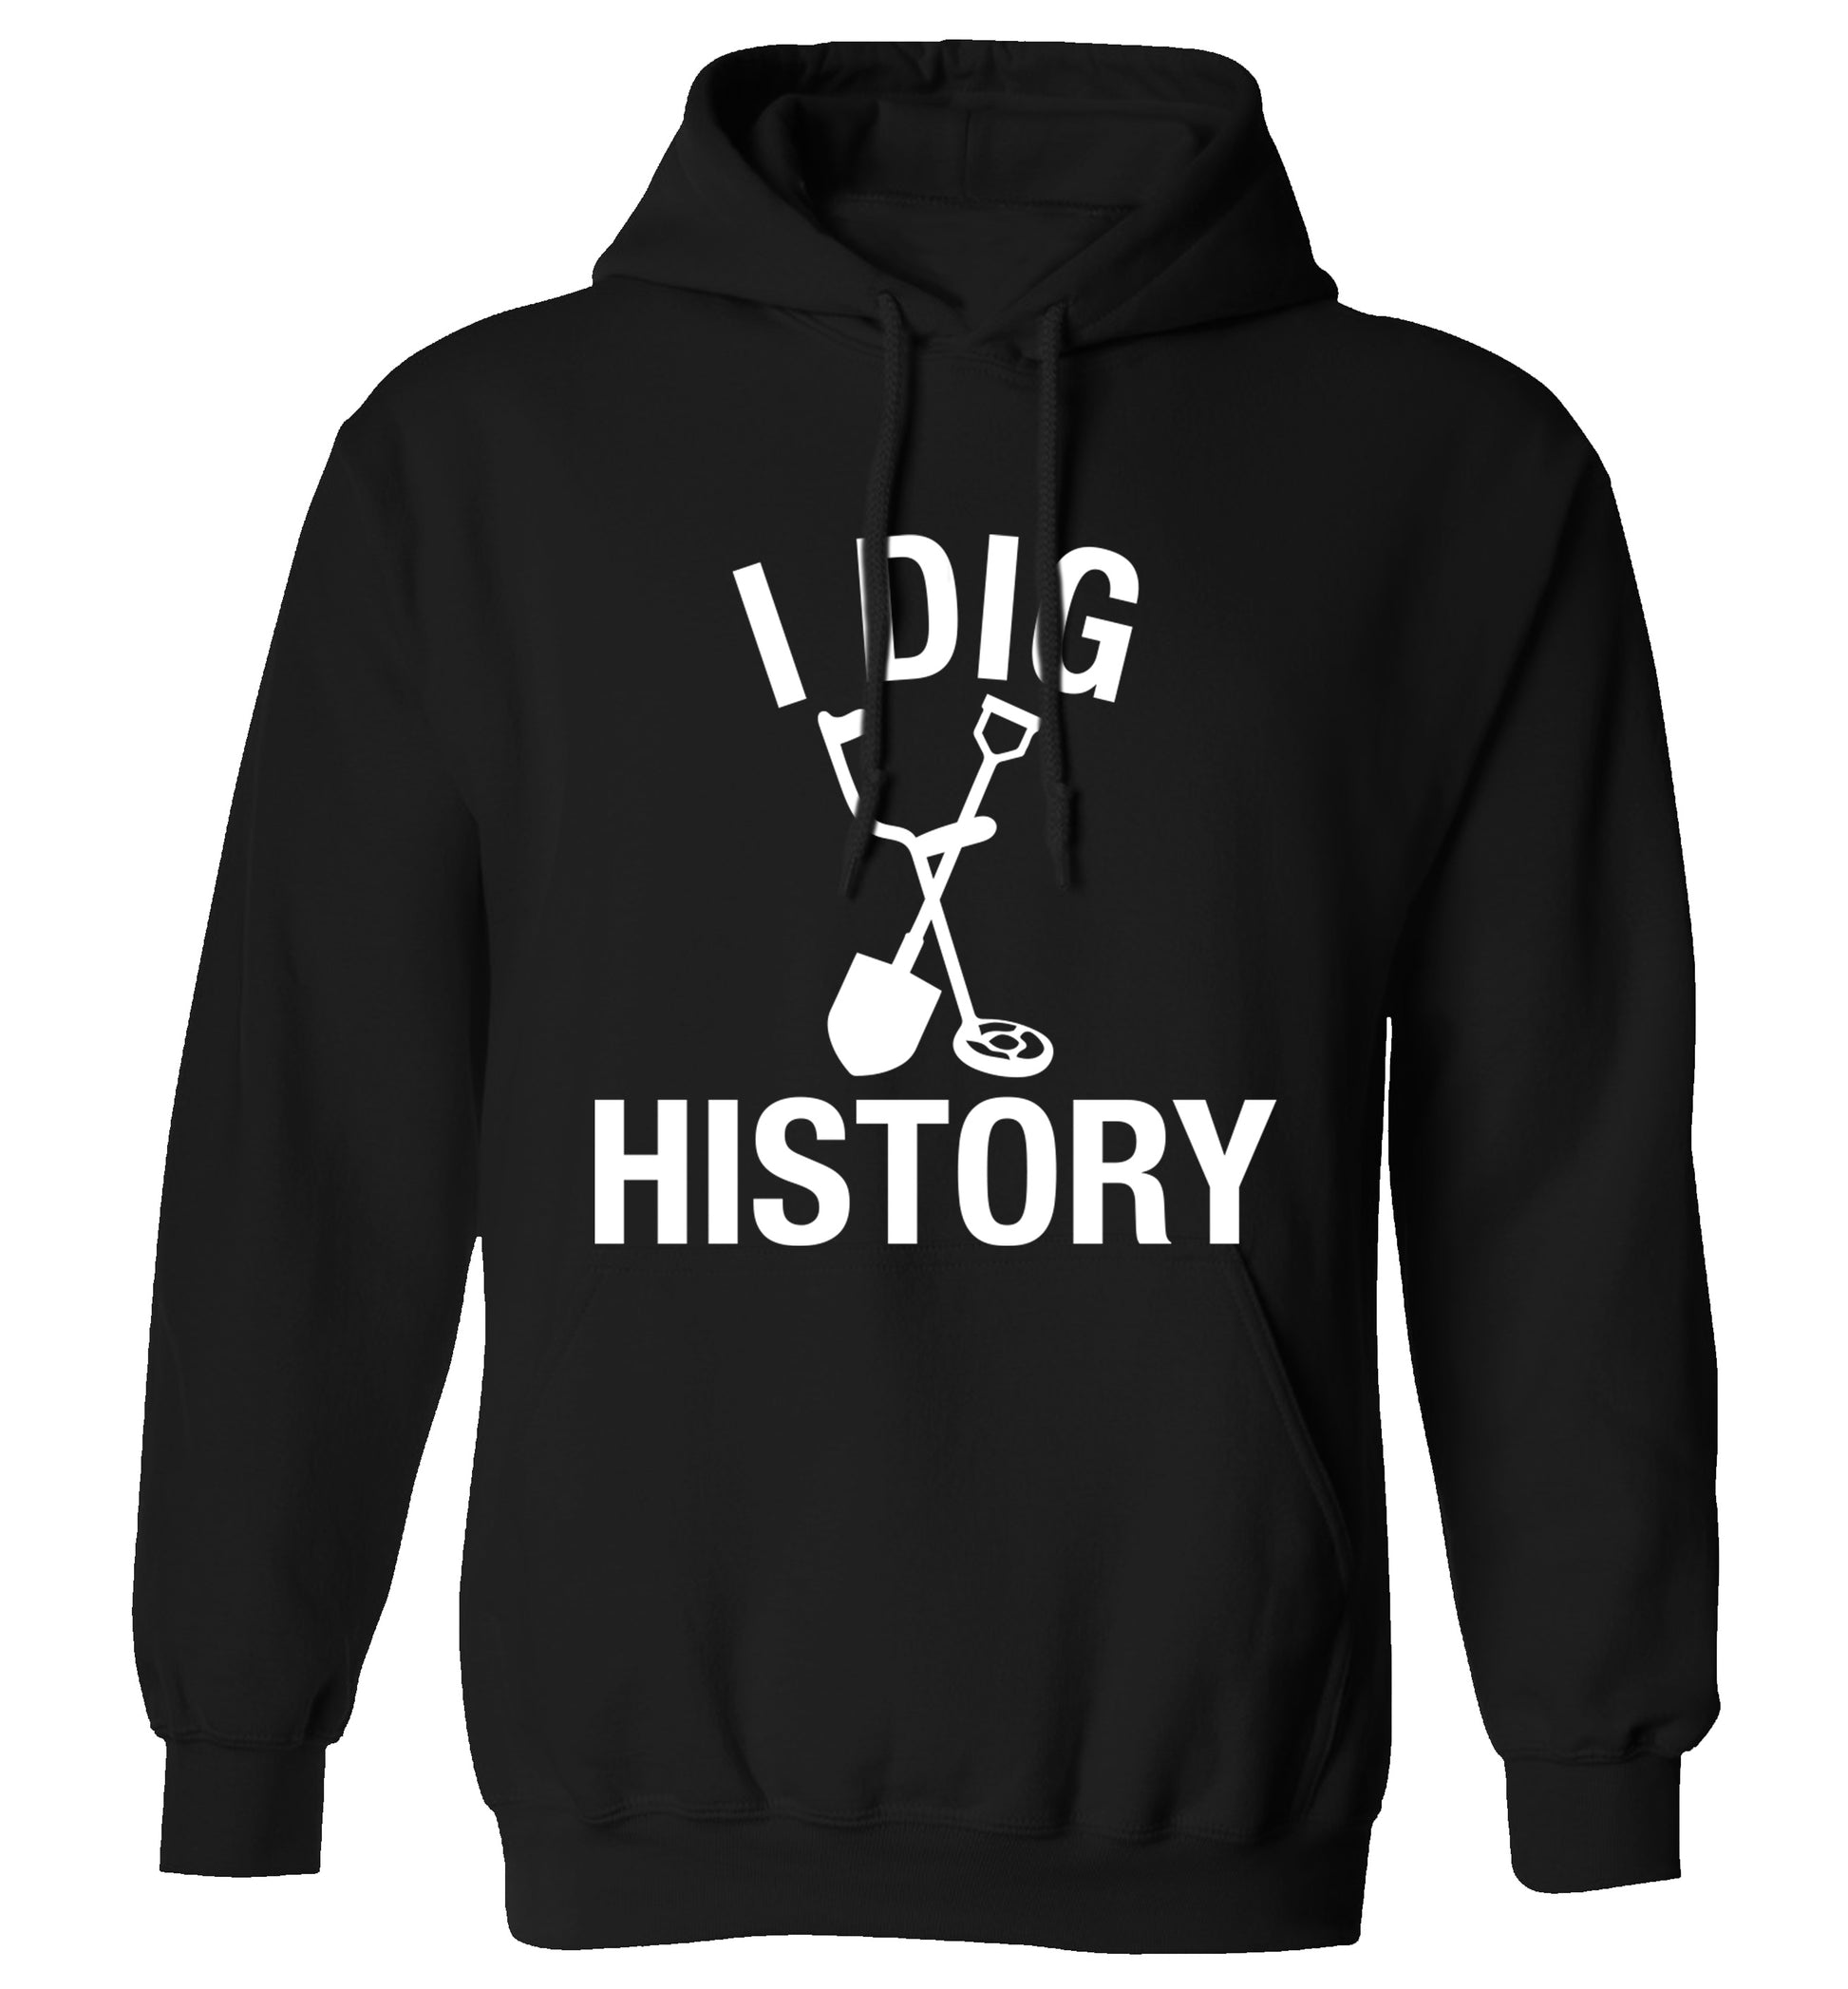 I dig history adults unisex black hoodie 2XL